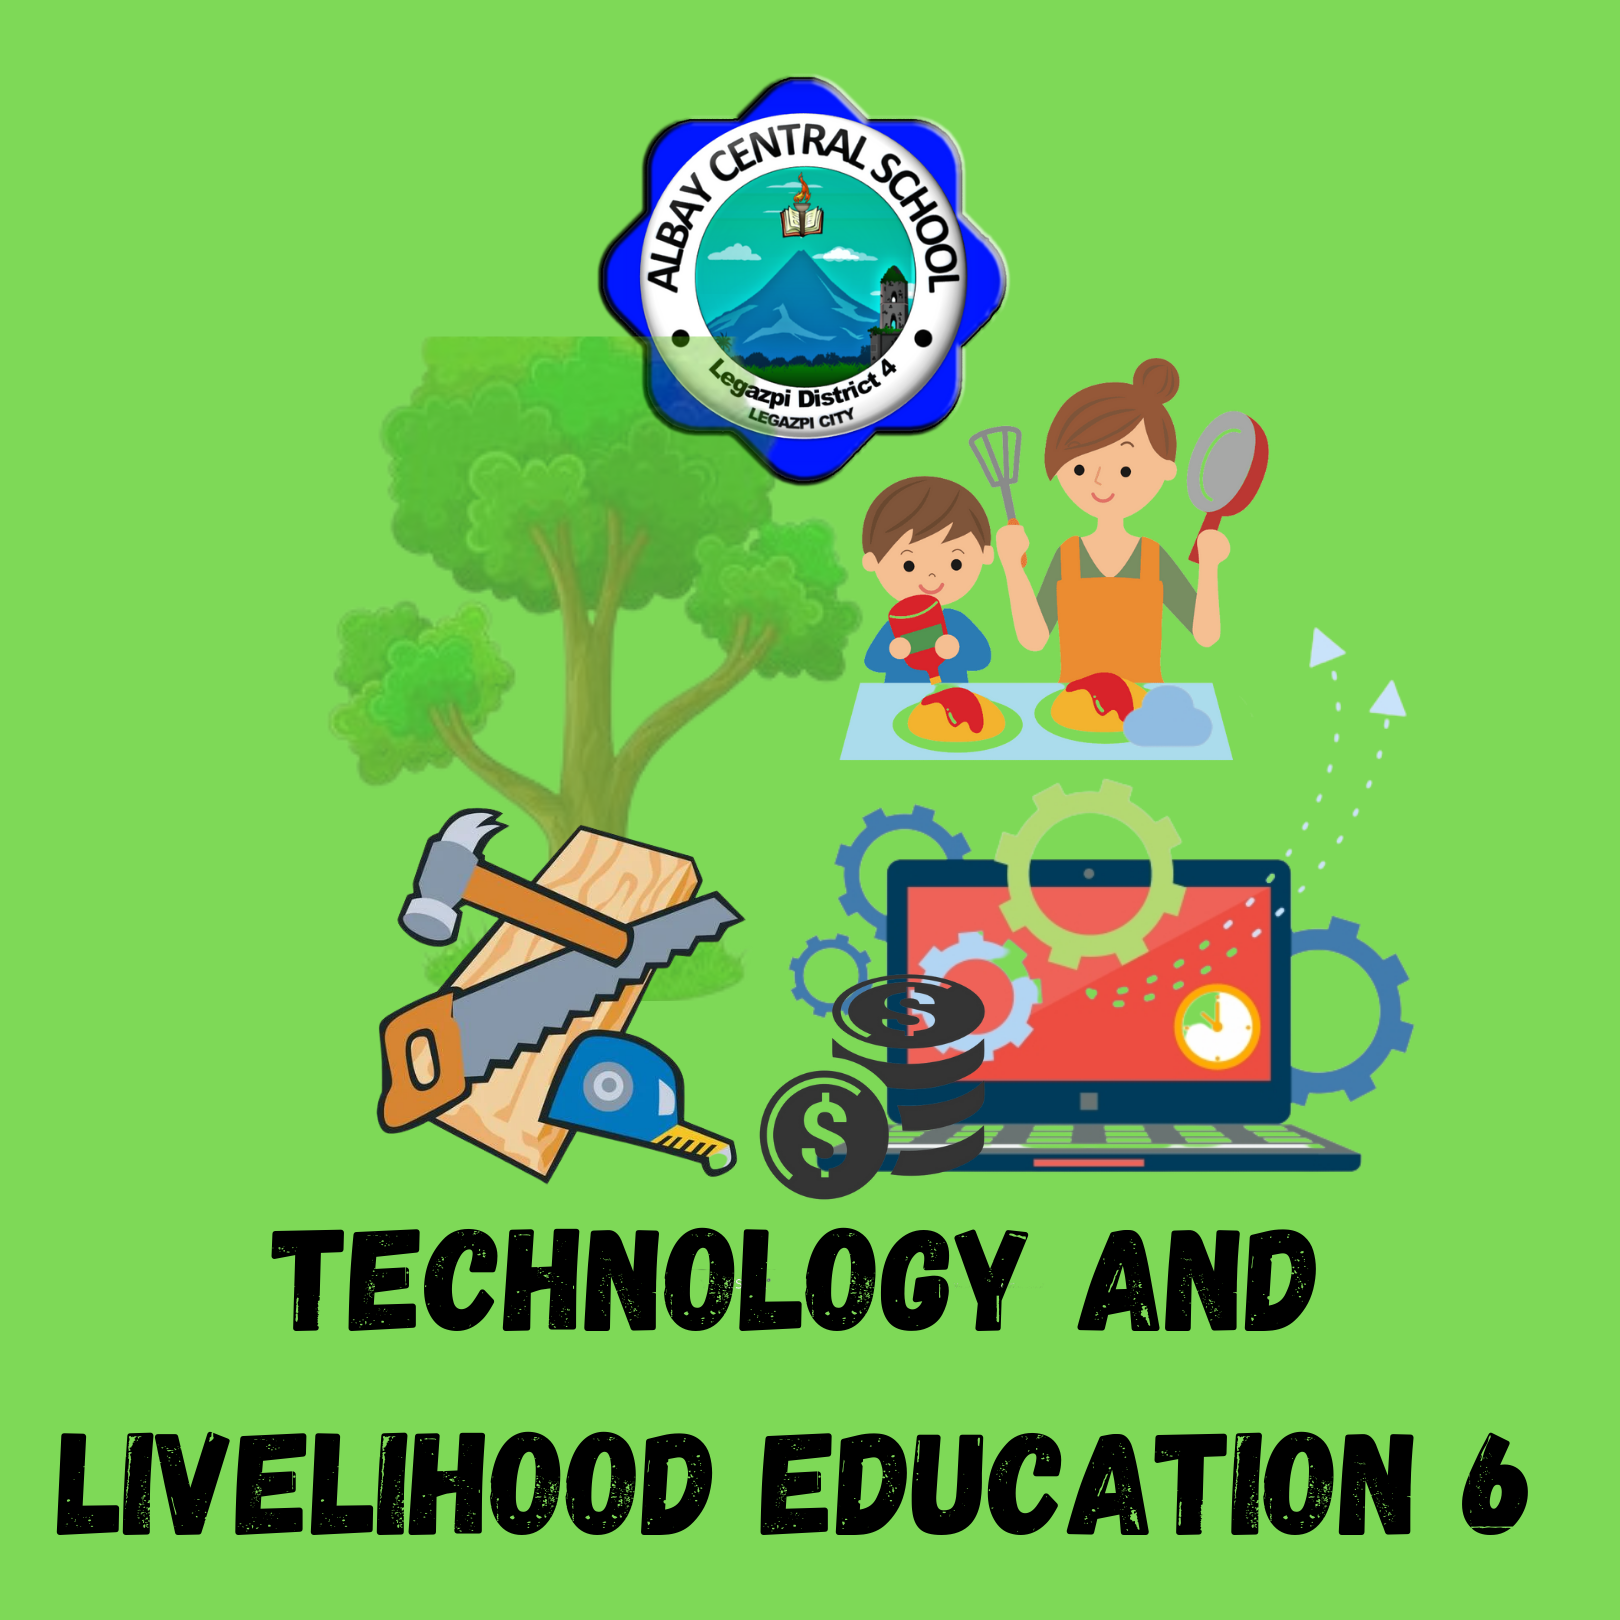 Technology and Livelihood Education 6